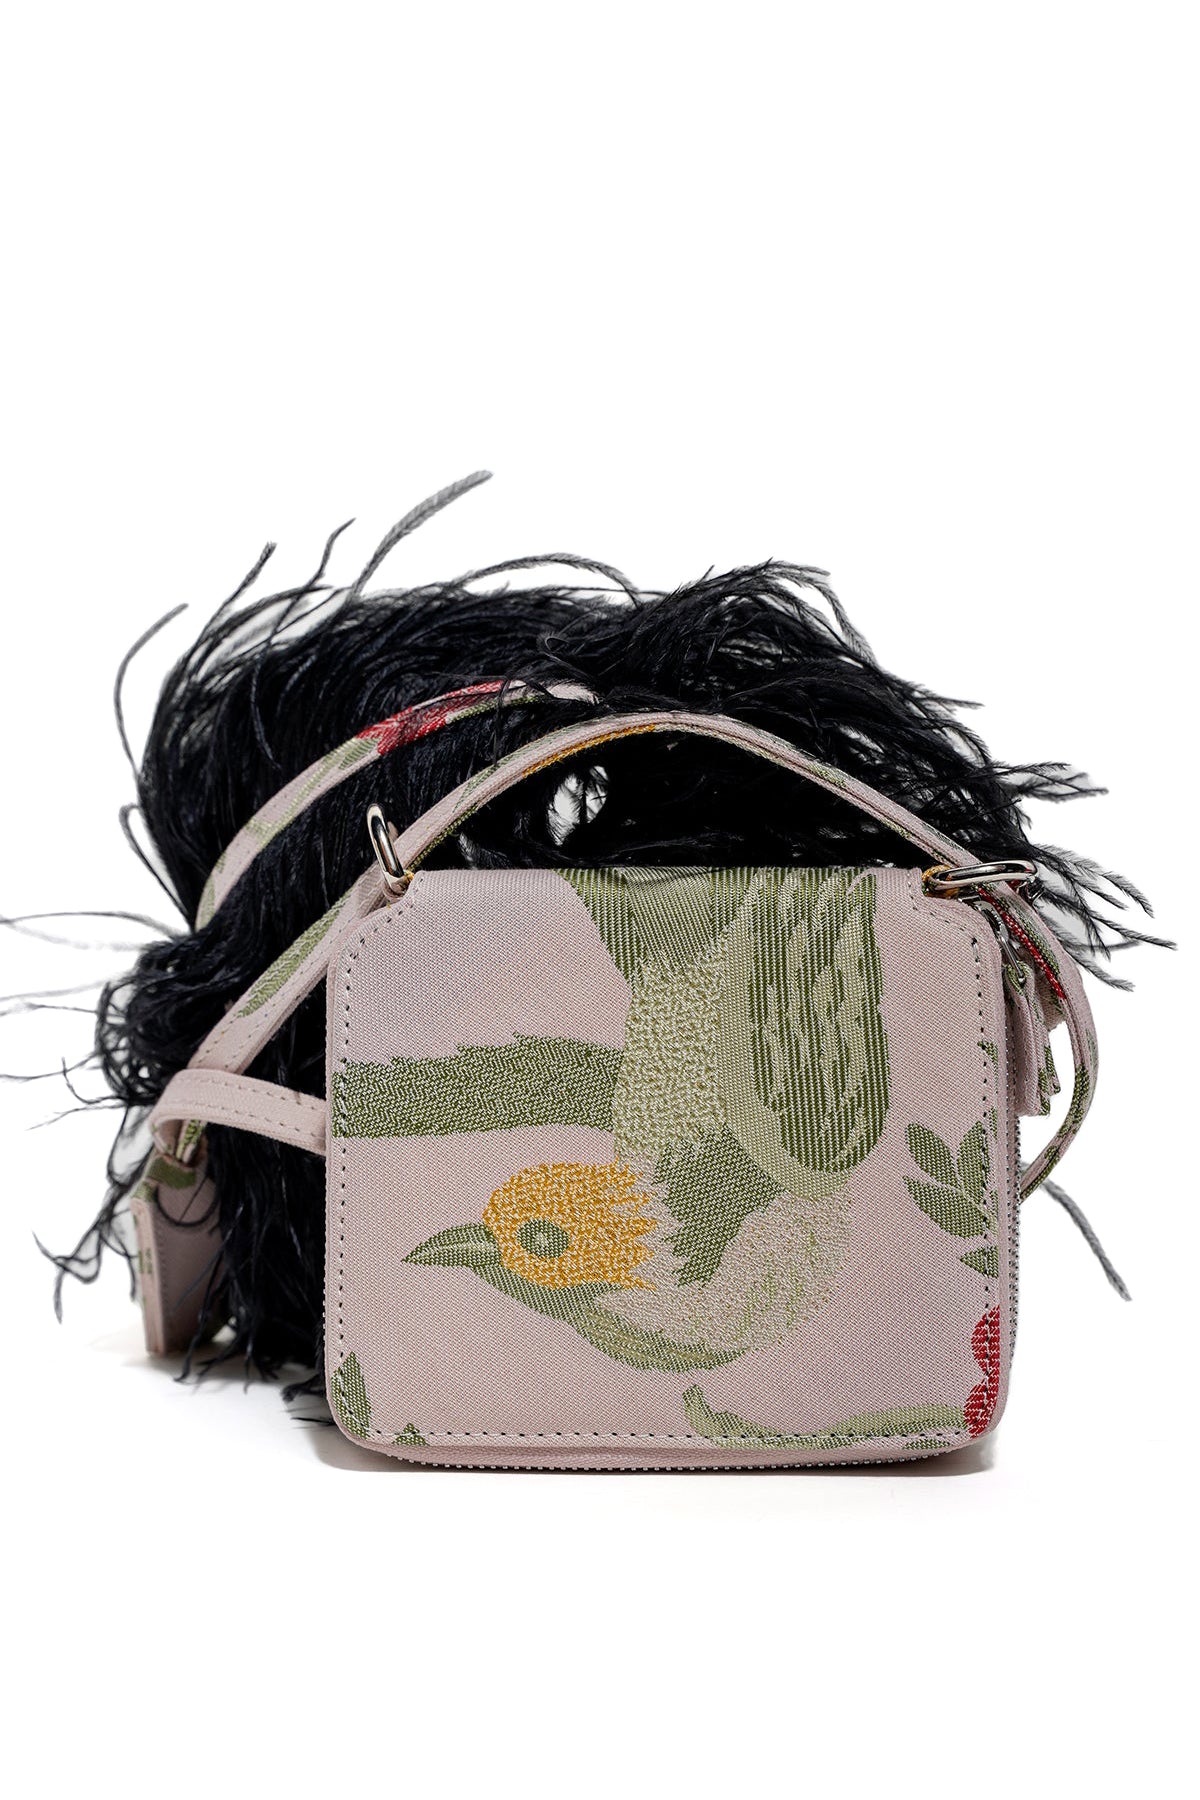 Lesportsac | Bags | Lesportsac Peacock Feather Masquerade Bag Shoulder  Crossbody Rainbow Pockets | Poshmark